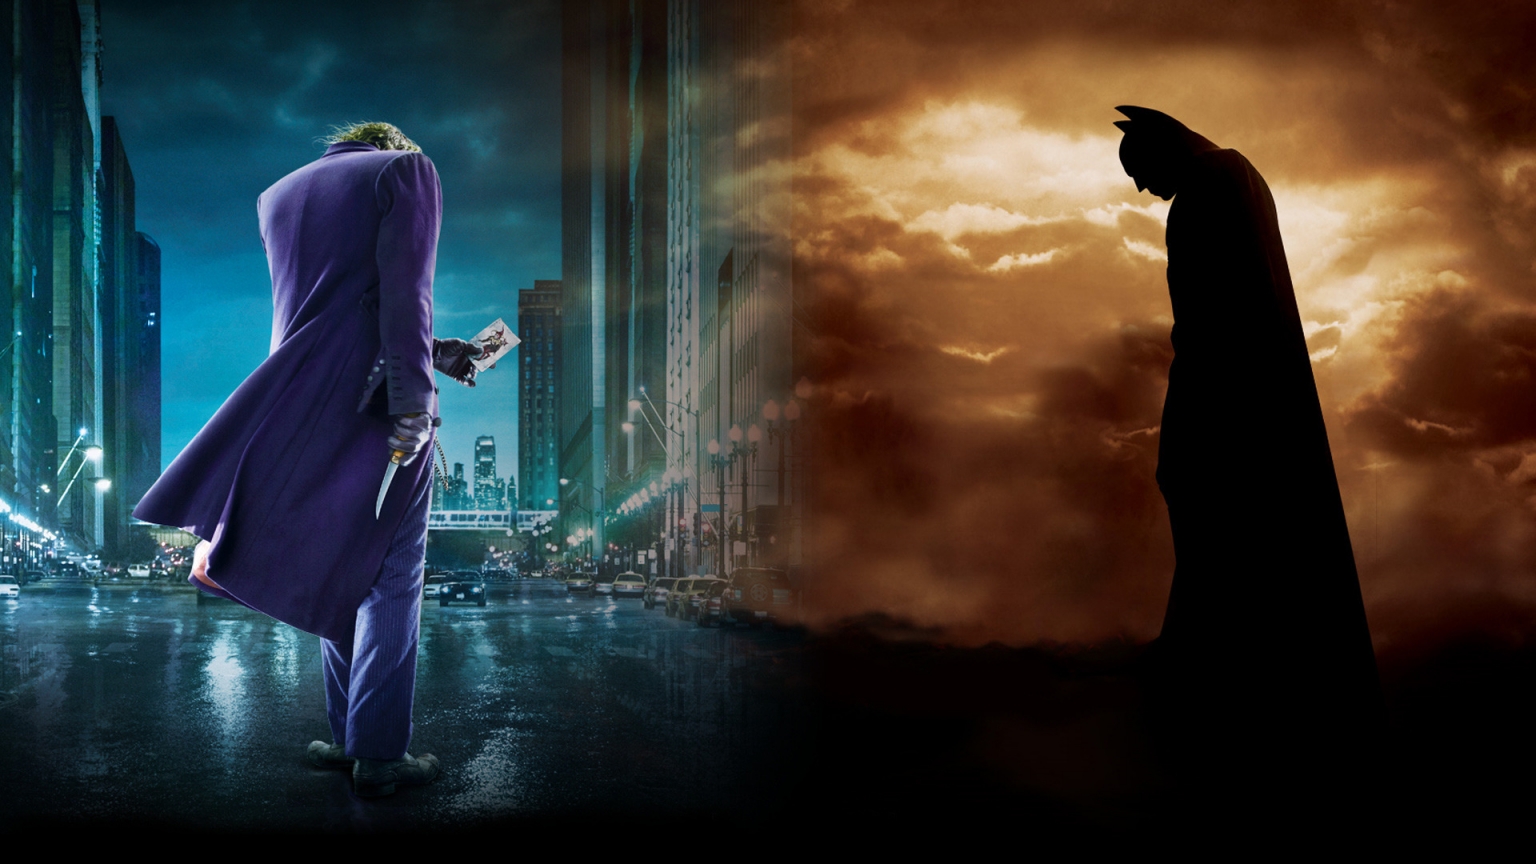 Batman and The Joker for 1536 x 864 HDTV resolution